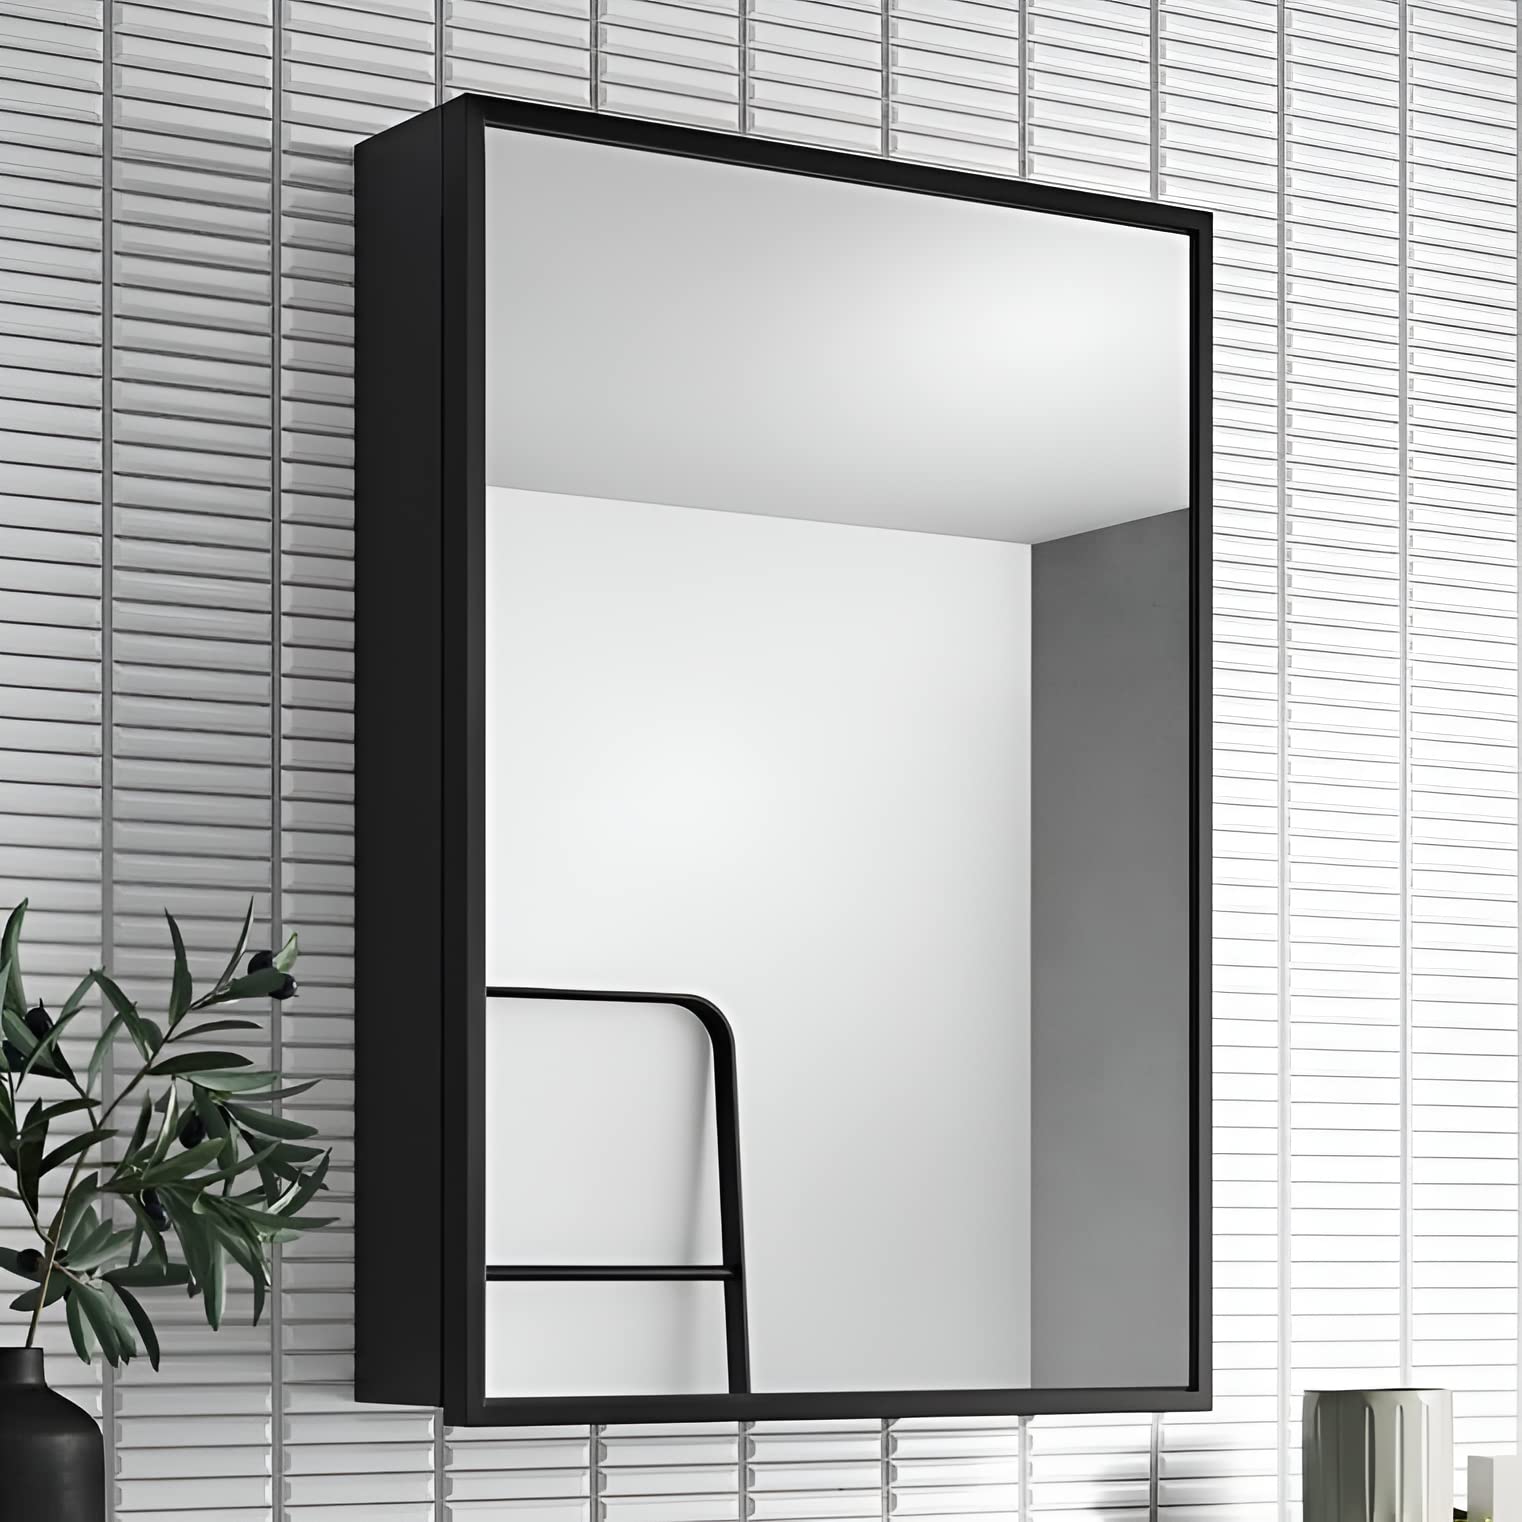 Plantex Bathroom Mirror Cabinet/Heavy Duty Steel Bathroom Organizer Cabinet/Bathroom Accessories (Black,14 X 20 Inches)